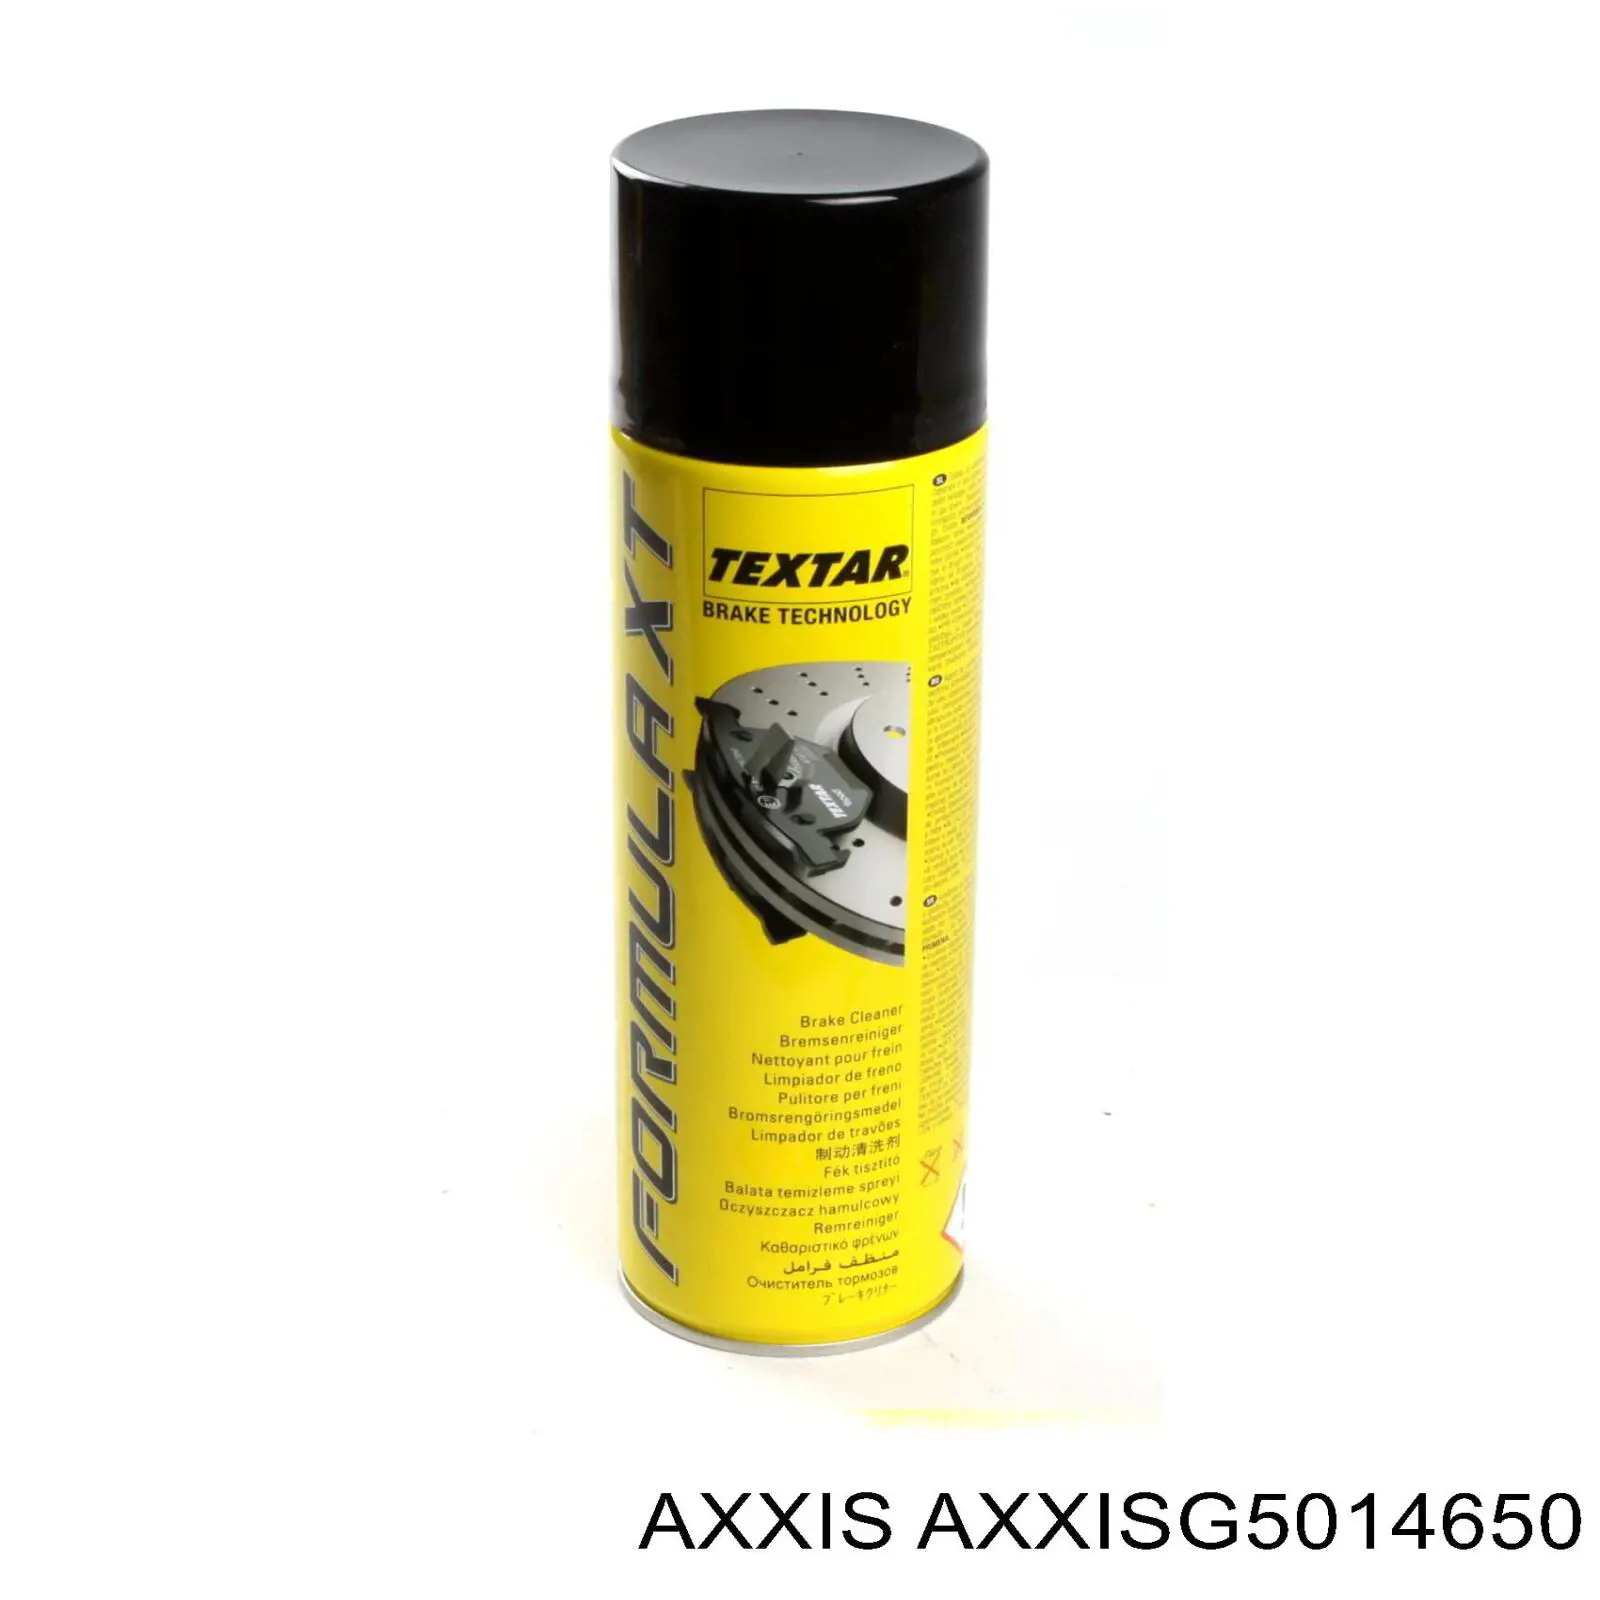 Очиститель тканной обивки салона AXXIS AXXISG5014650